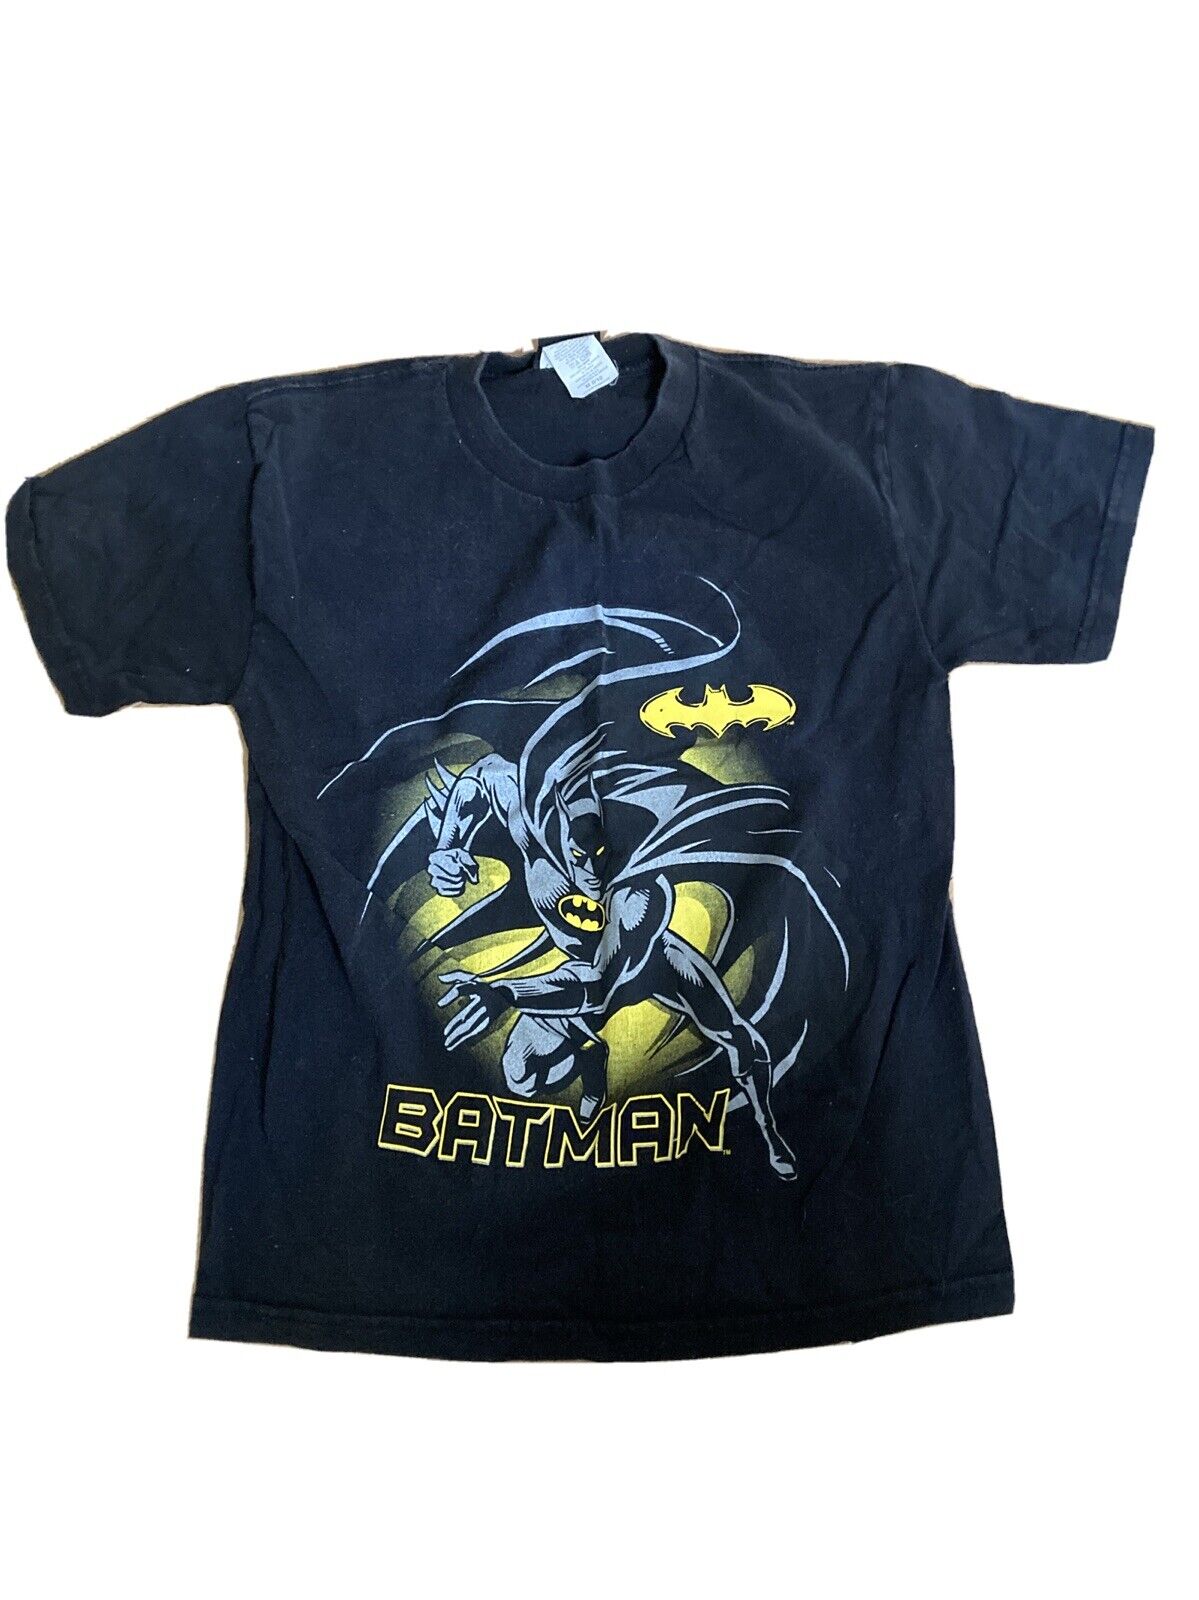 Batman Begins T-Shirt 2005 Black Distressed Bat Symbol Logo Vintage Sz MED 8-10